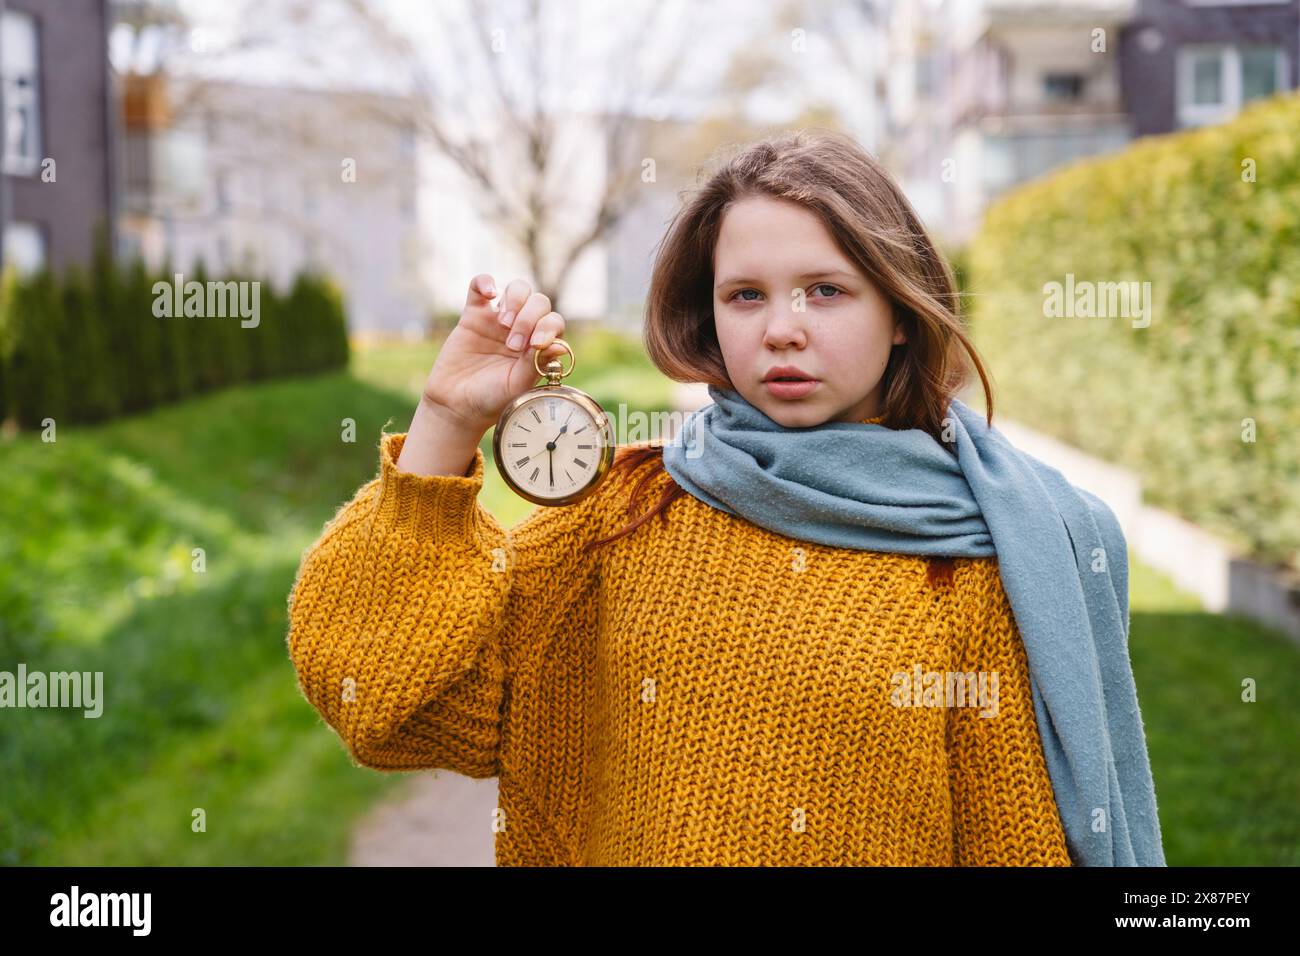 Sad girl holding clock in garden Stock Photo